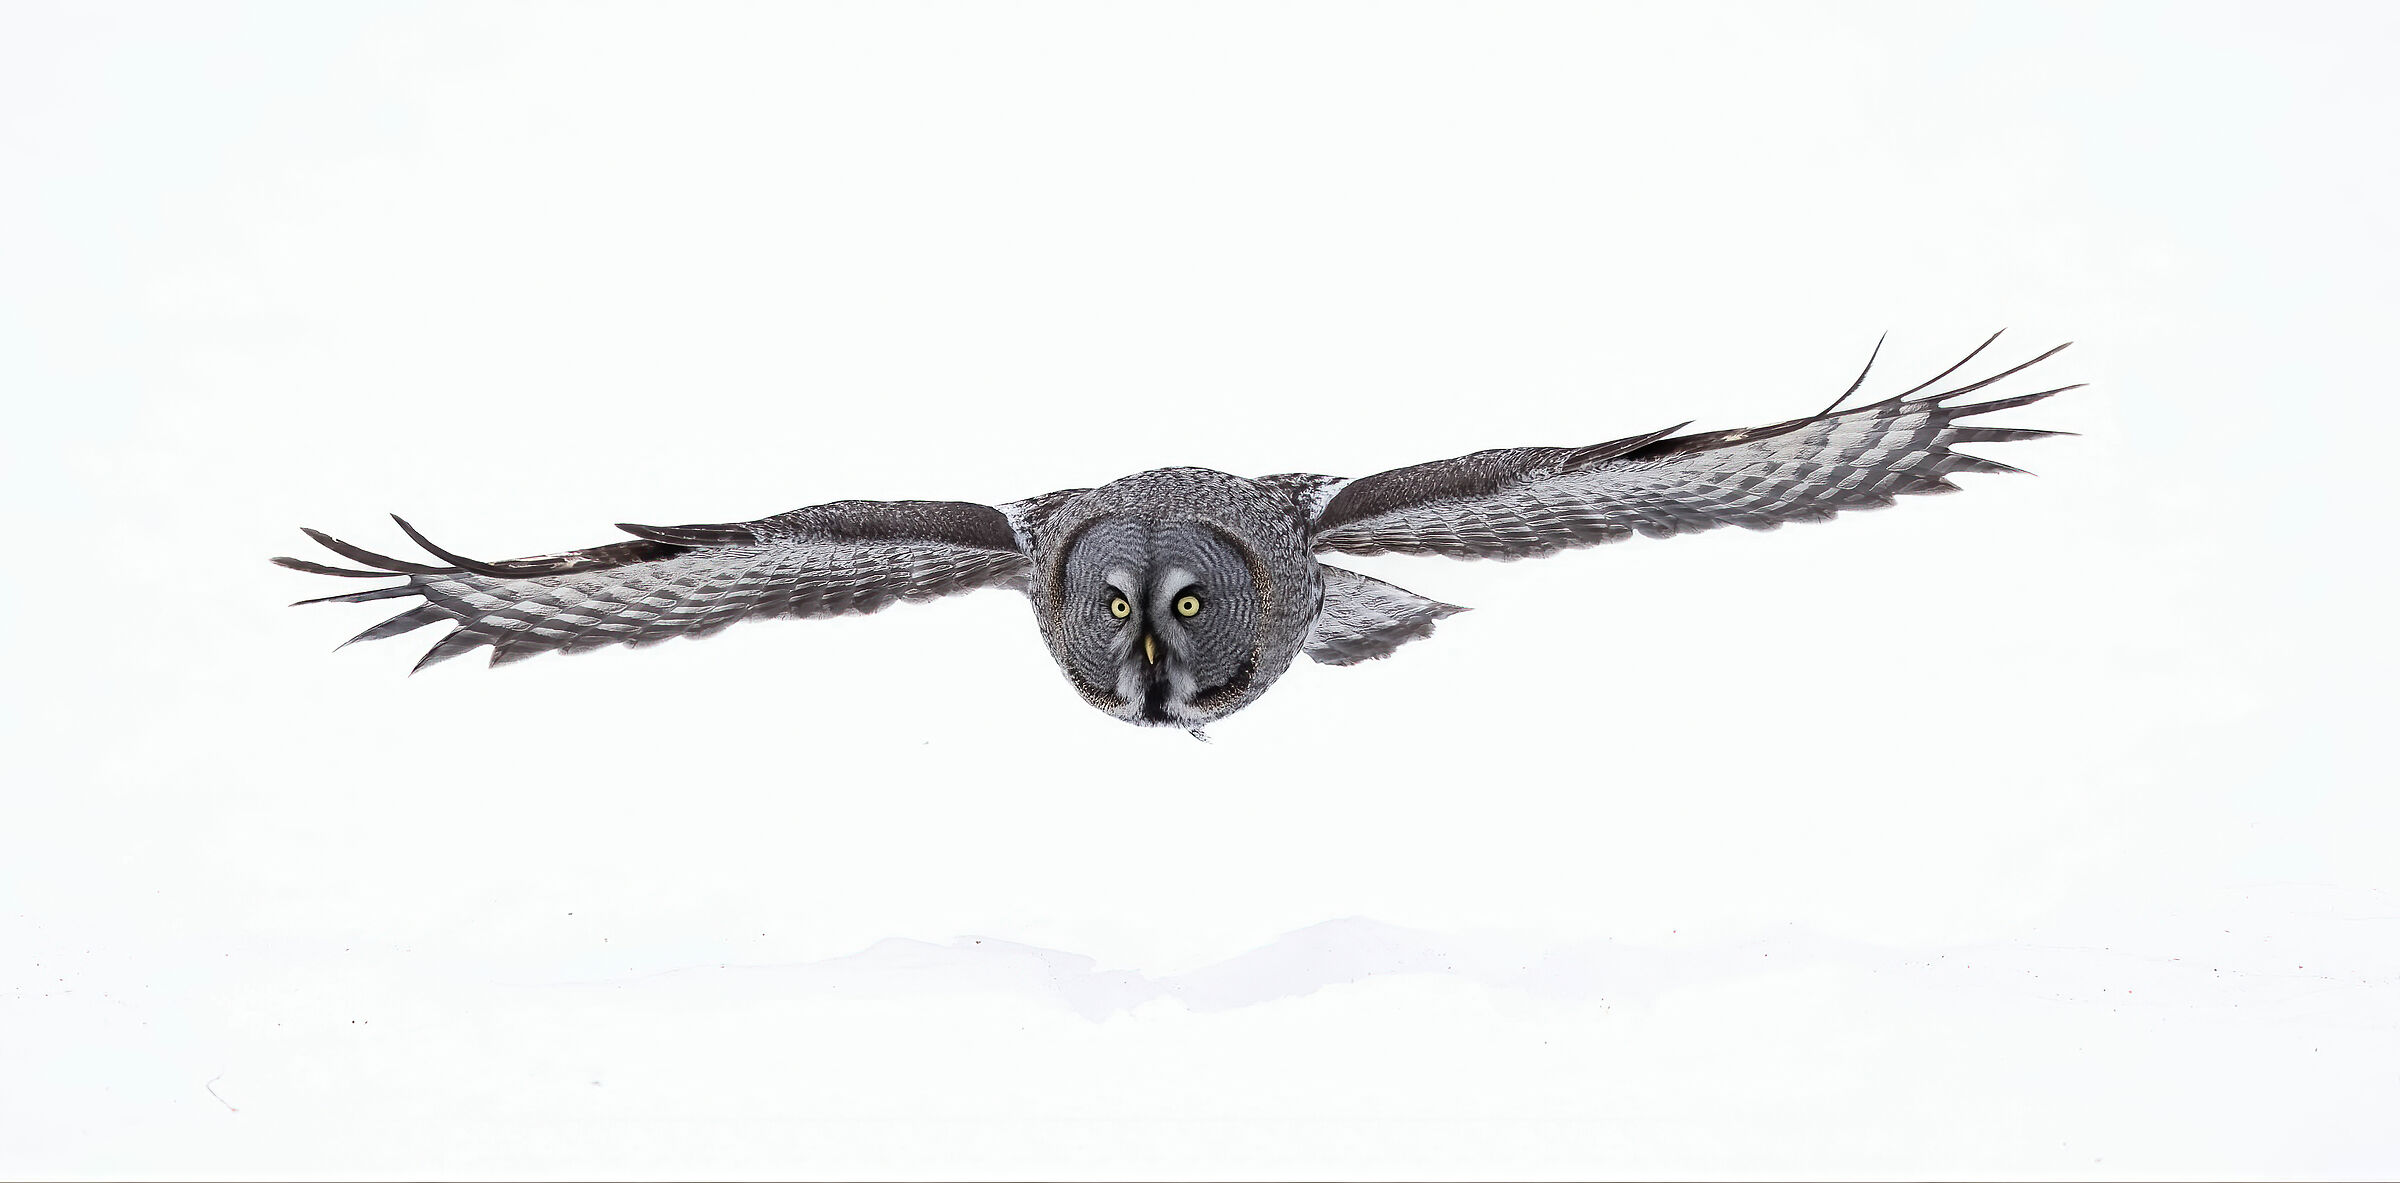 Gliding on the snow (Lapland owl)...